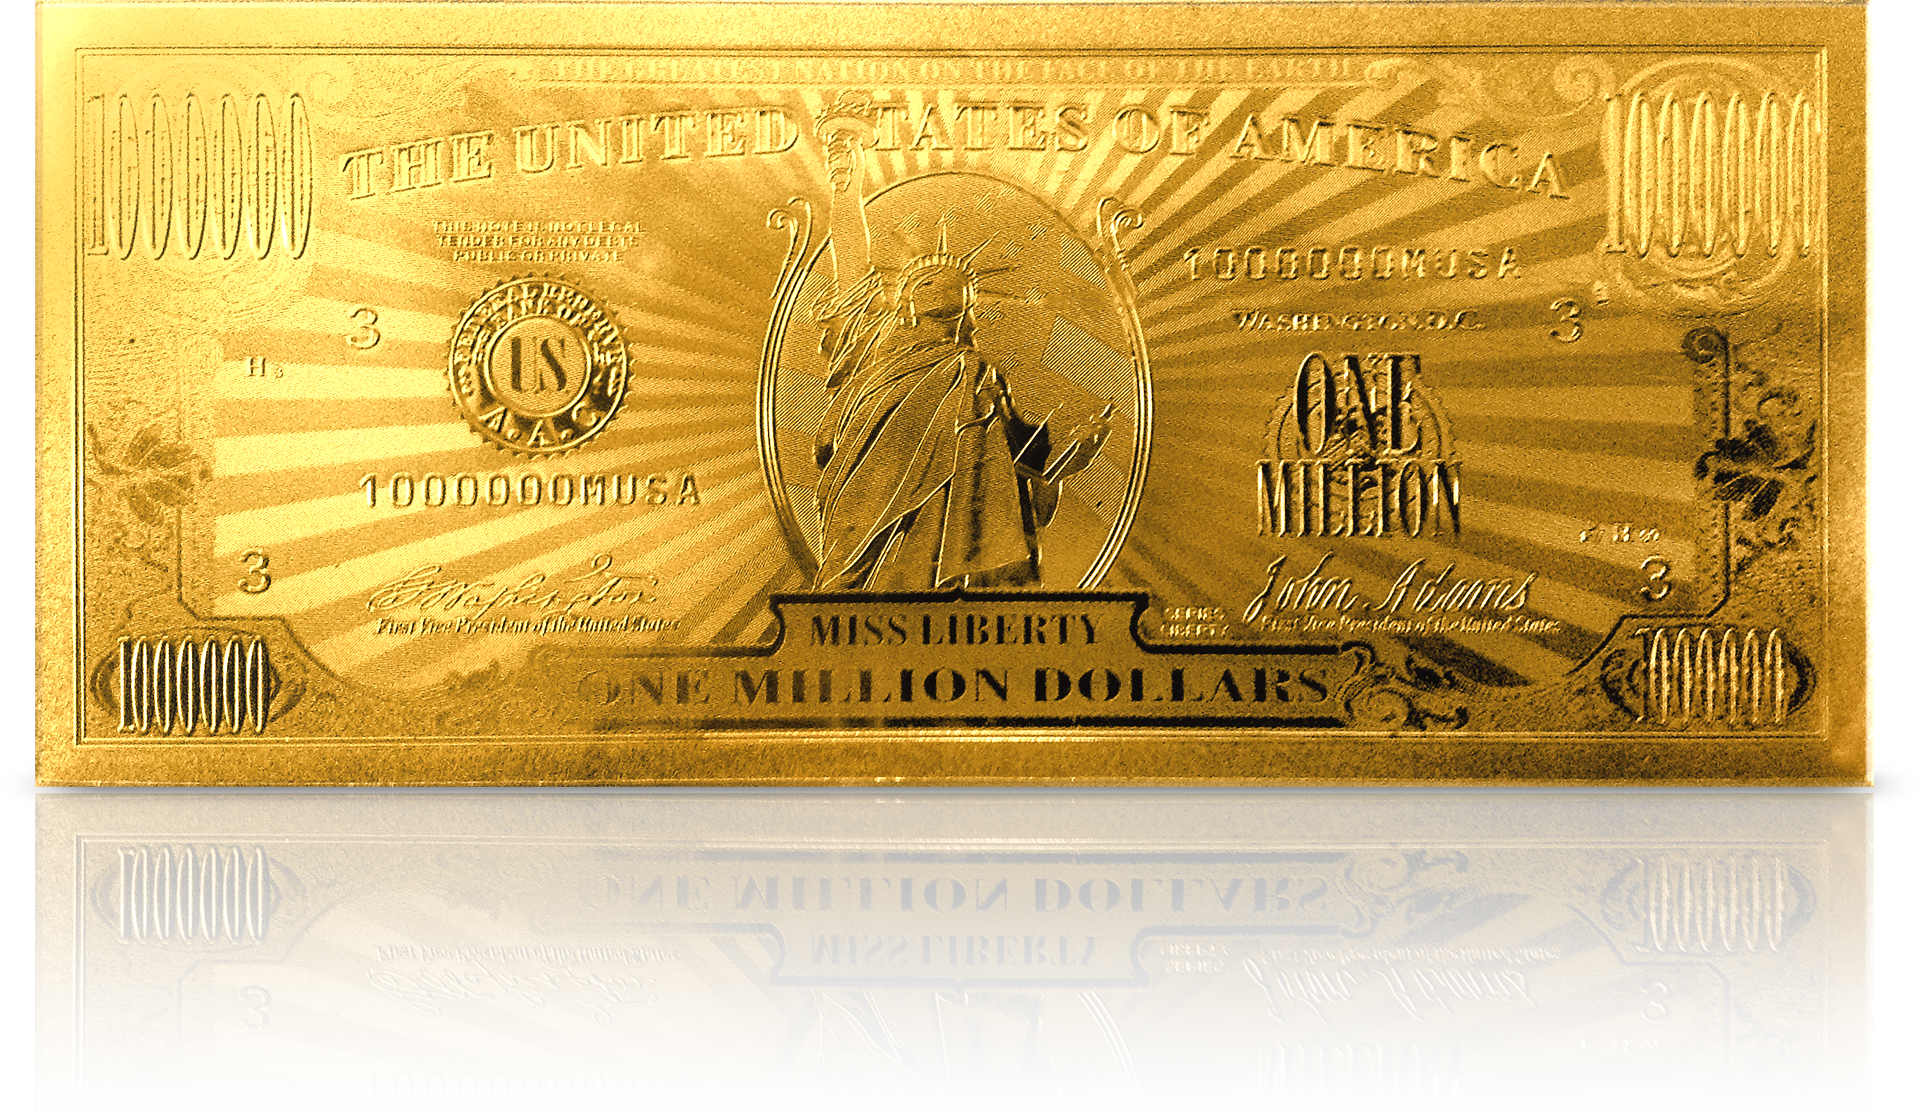 1000 золота в долларах